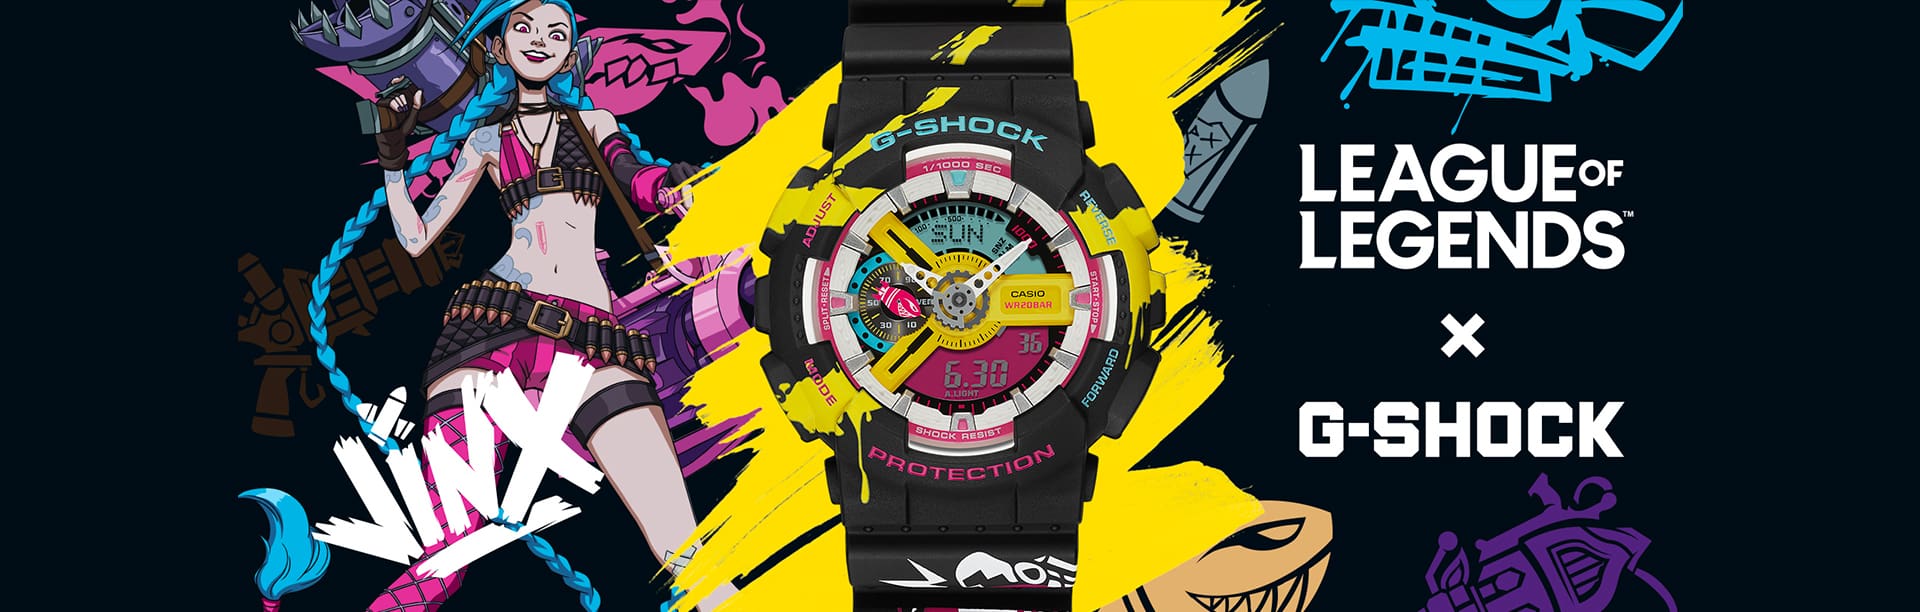 G-SHOCK League of Legends GA-110LL watch and artwork